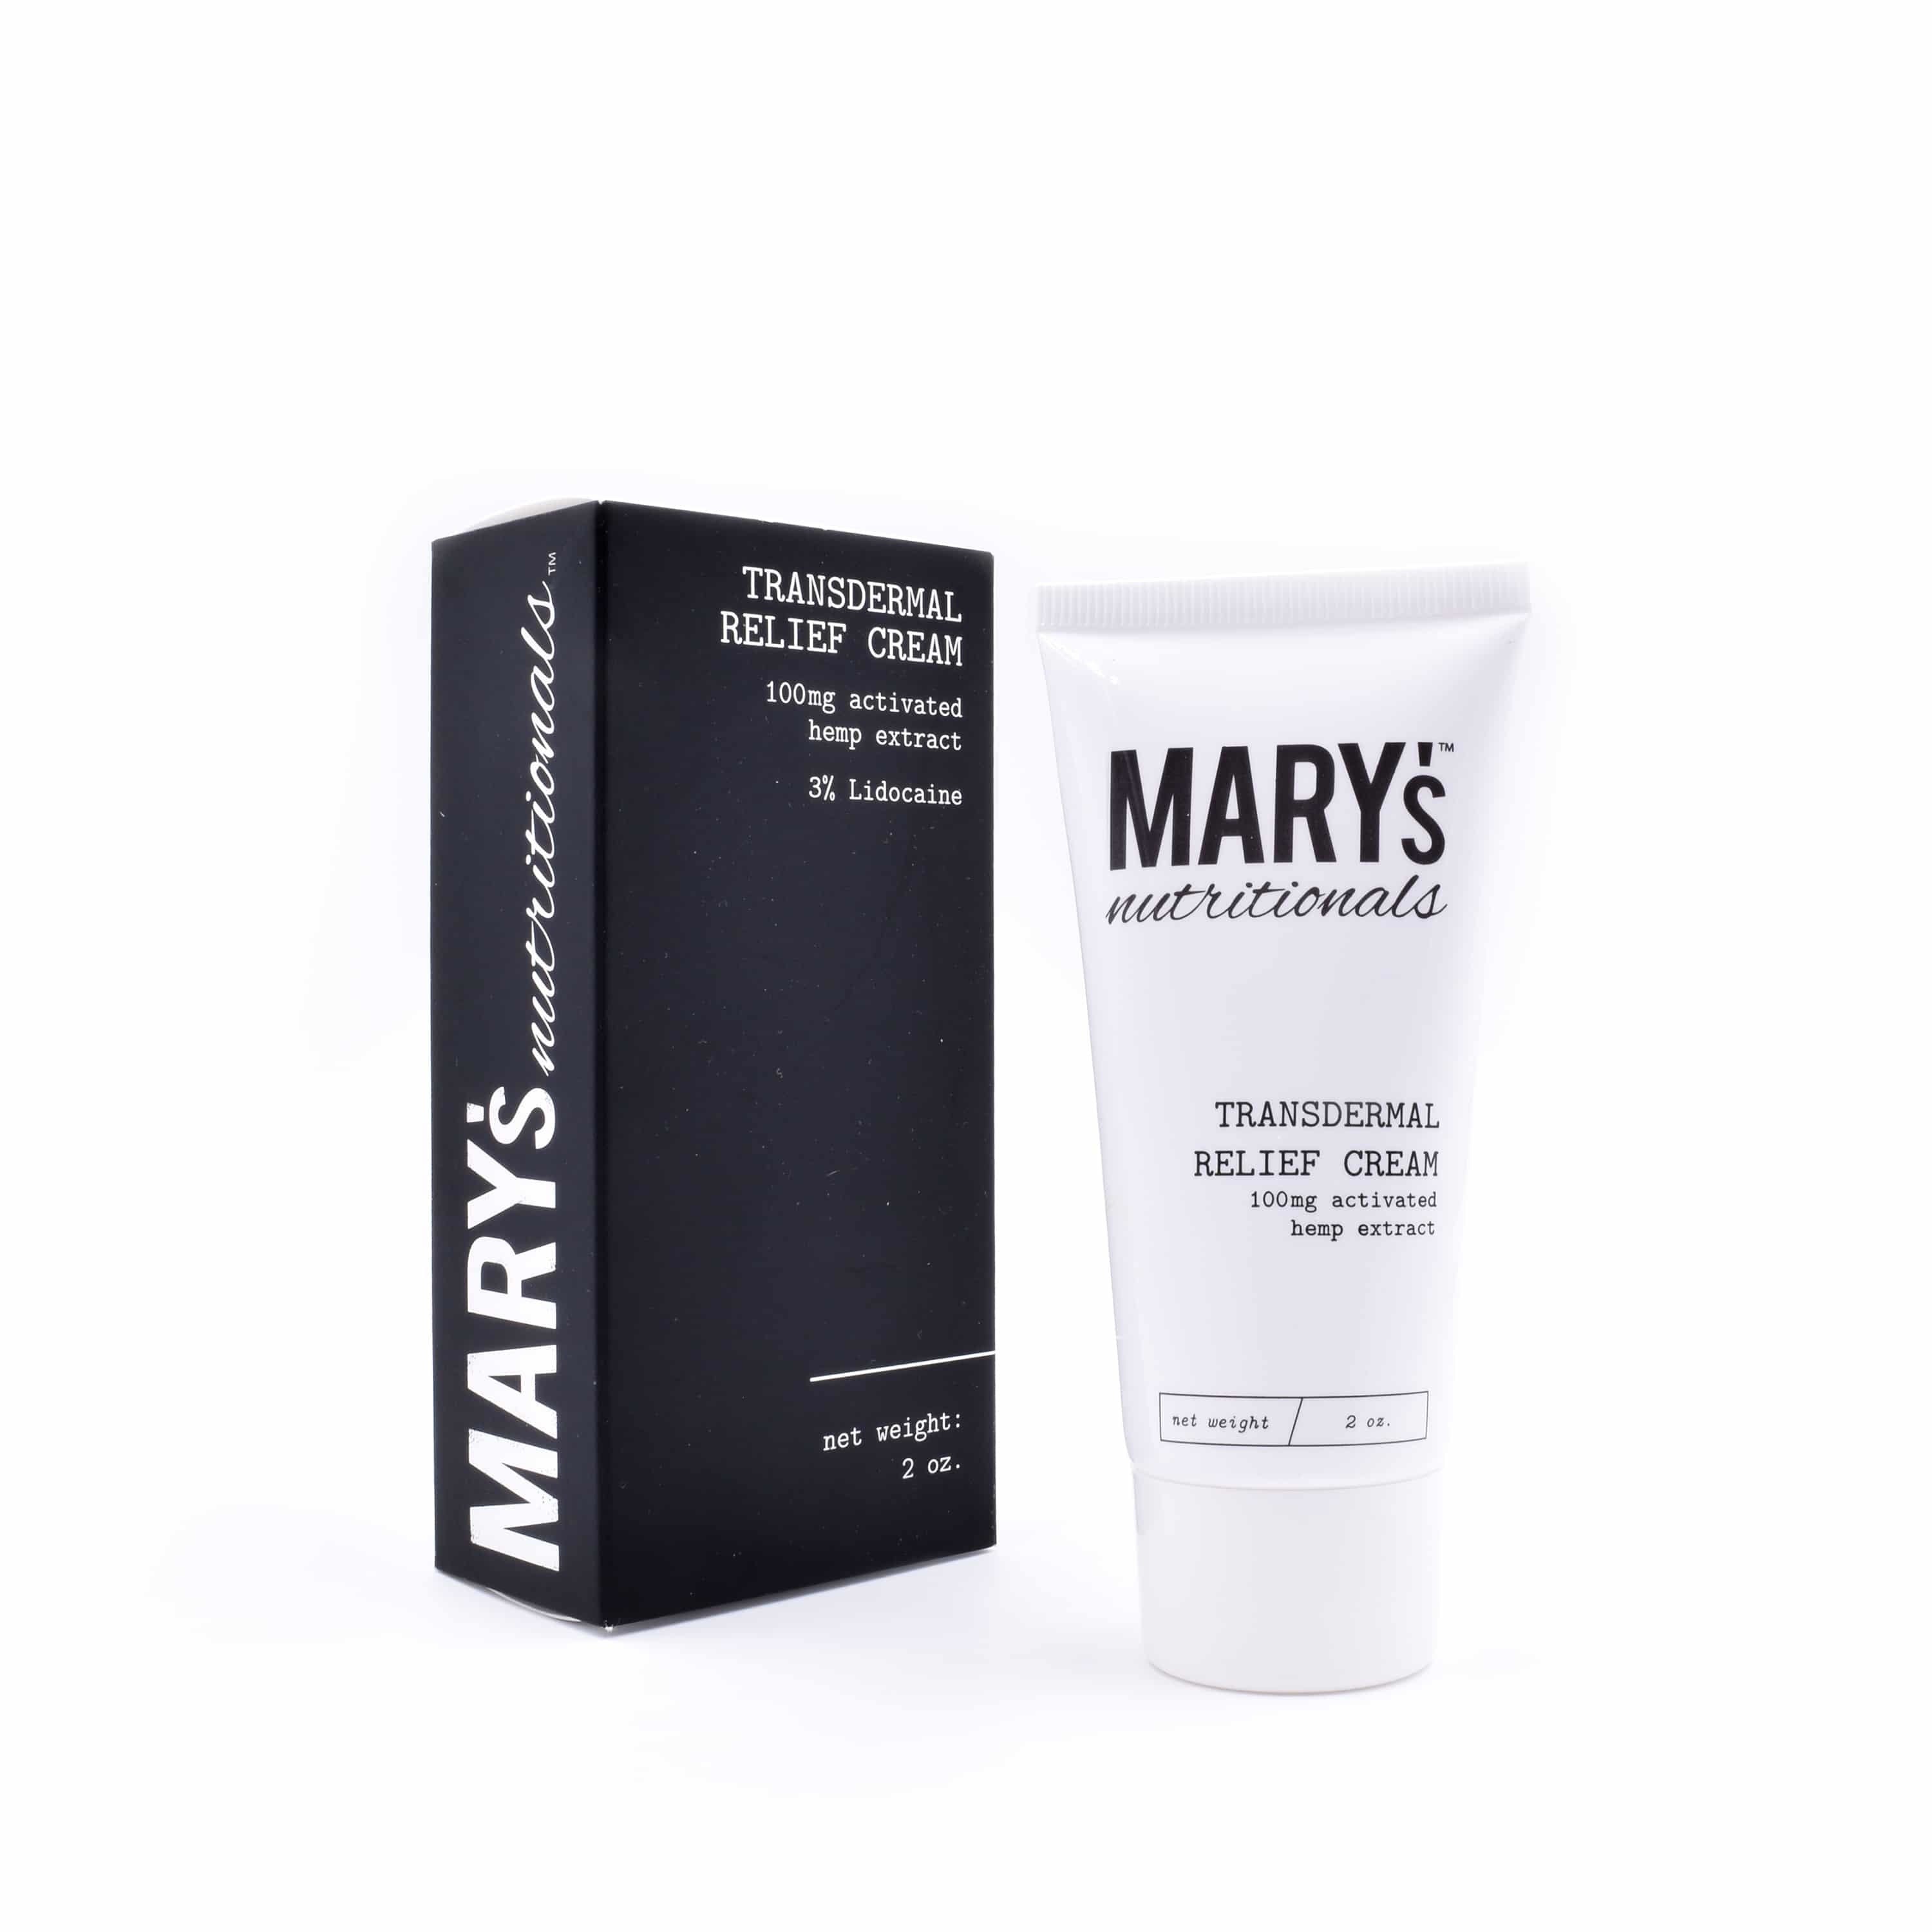 Transdermal Relief Cream - Mary's